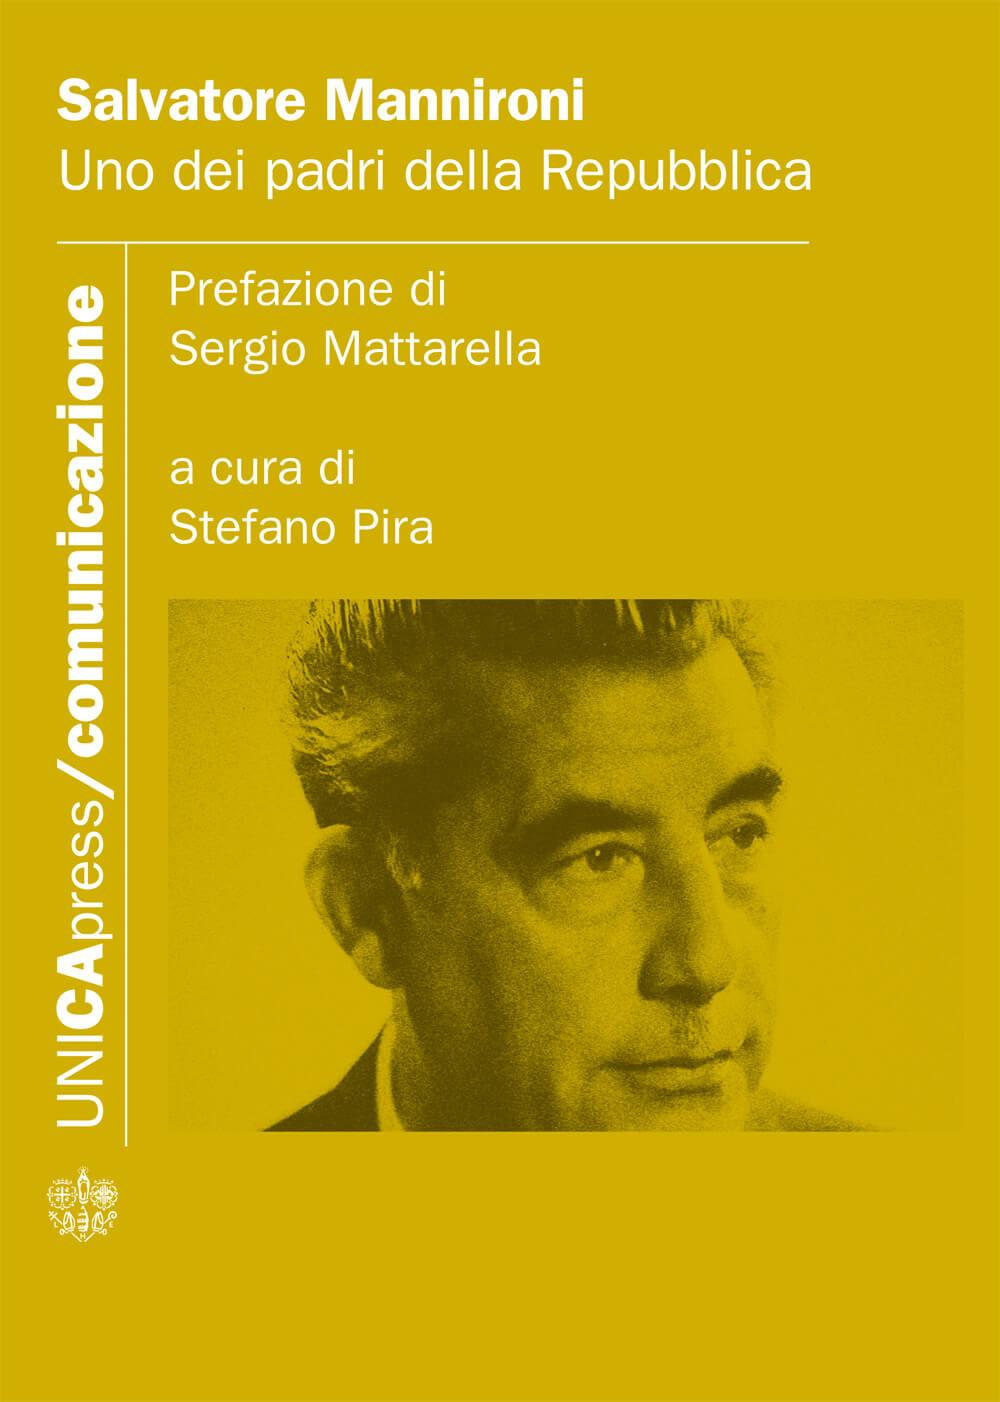 Salvatore Mannironi - Bologna University Press